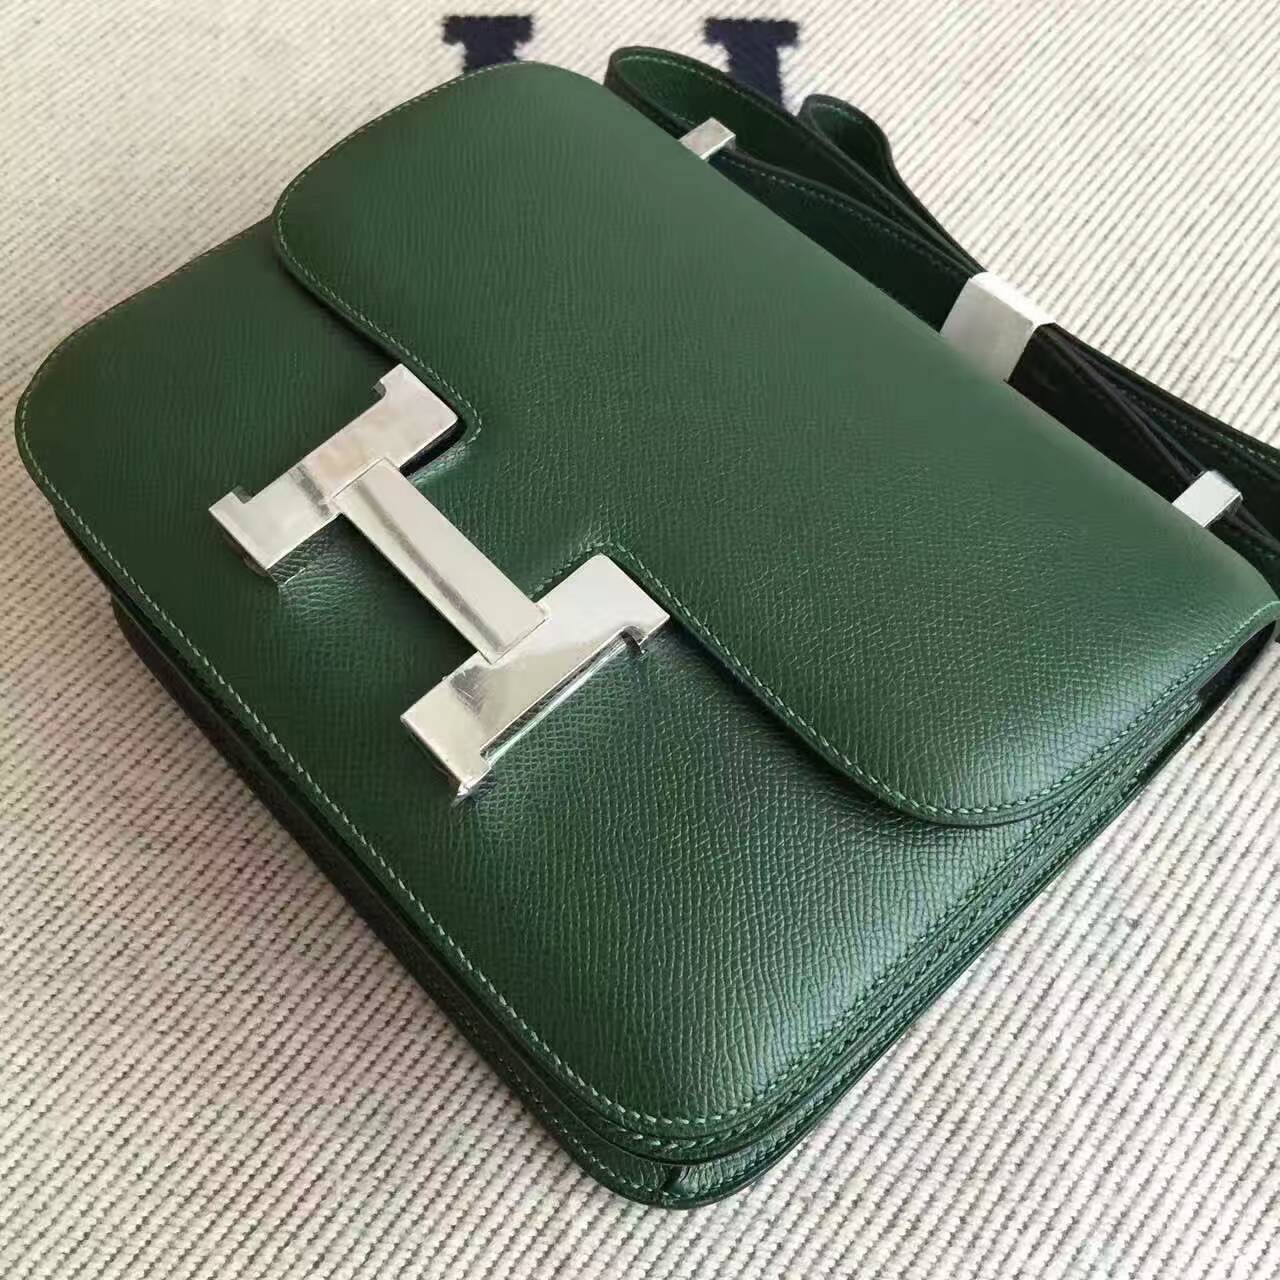 High Quality Hermes Constance Bag 24cm in 2Q Vert Anglais Epsom Leather